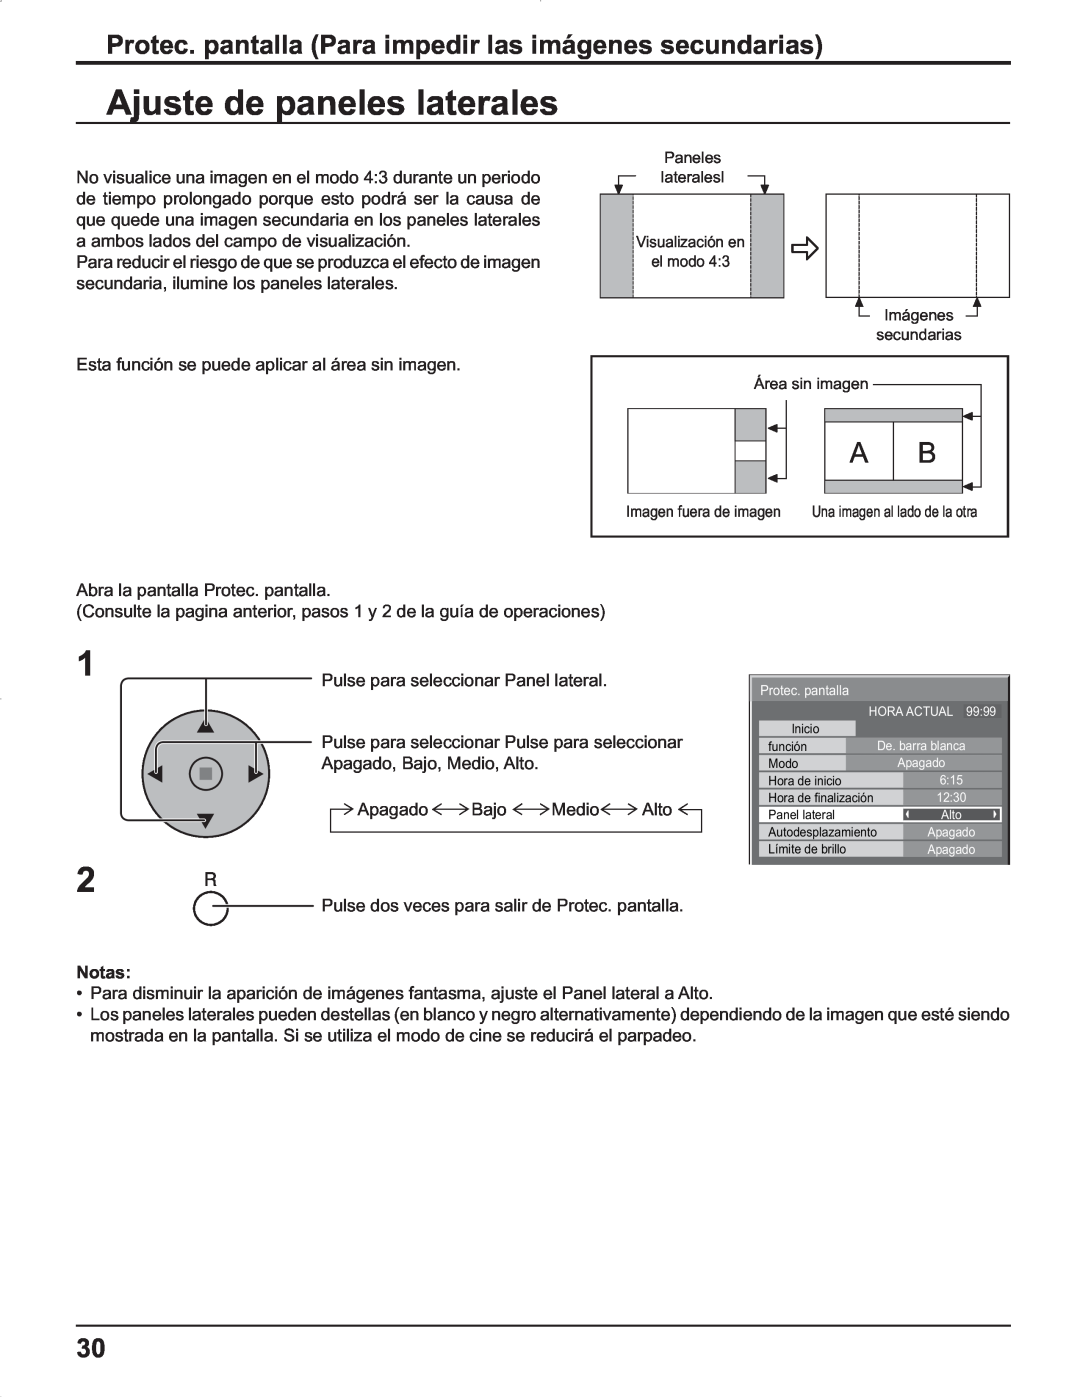 Panasonic TH-42PG9U, TH-37PR9U manual Ajuste de paneles laterales, Protec. pantalla Para impedir las imágenes secundarias 